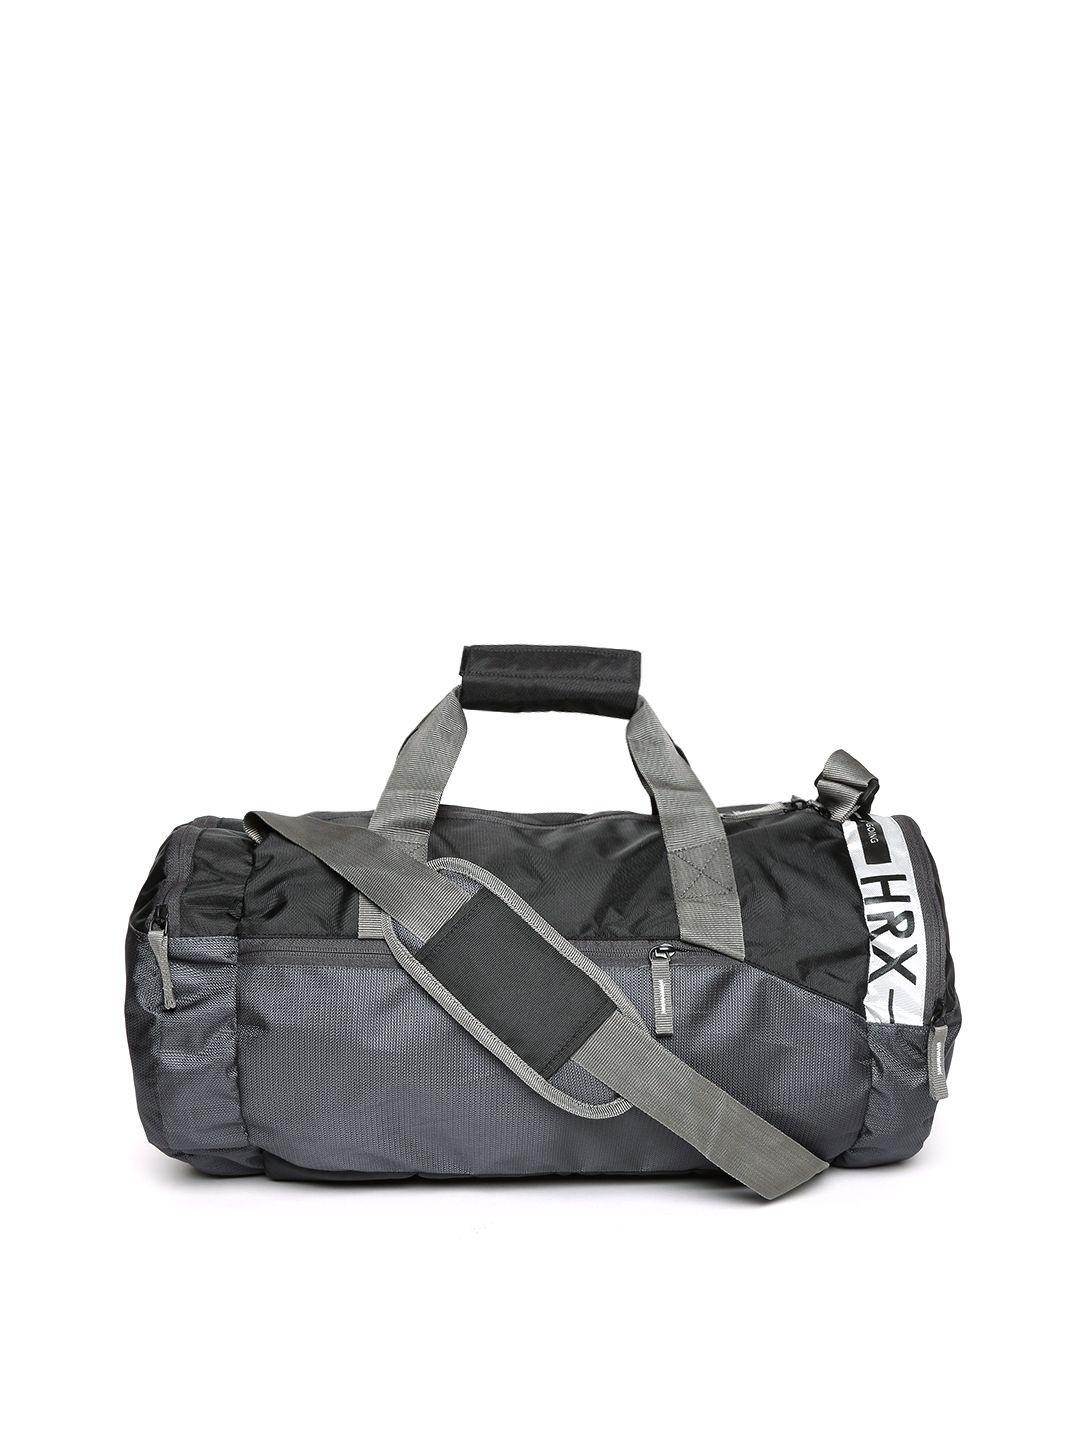 hrx by hrithik roshan unisex black & grey colourblocked training duffel bag